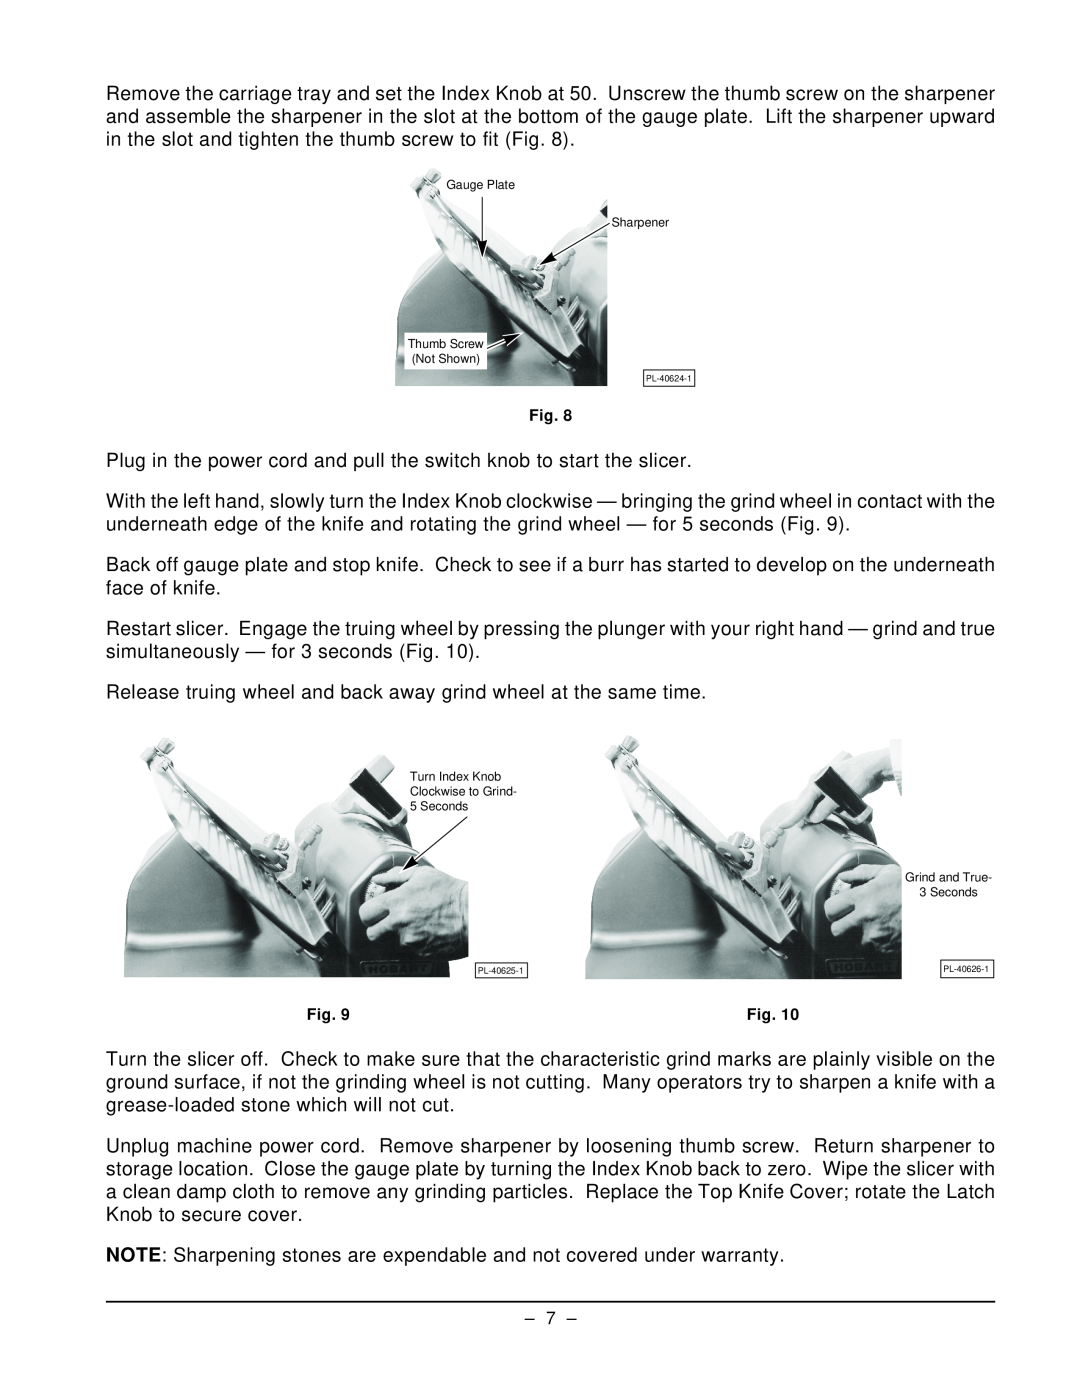 Hobart 1612P manual Gauge Plate Sharpener Thumb Screw Not Shown, Turn Index Knob Clockwise to Grind- 5 Seconds 